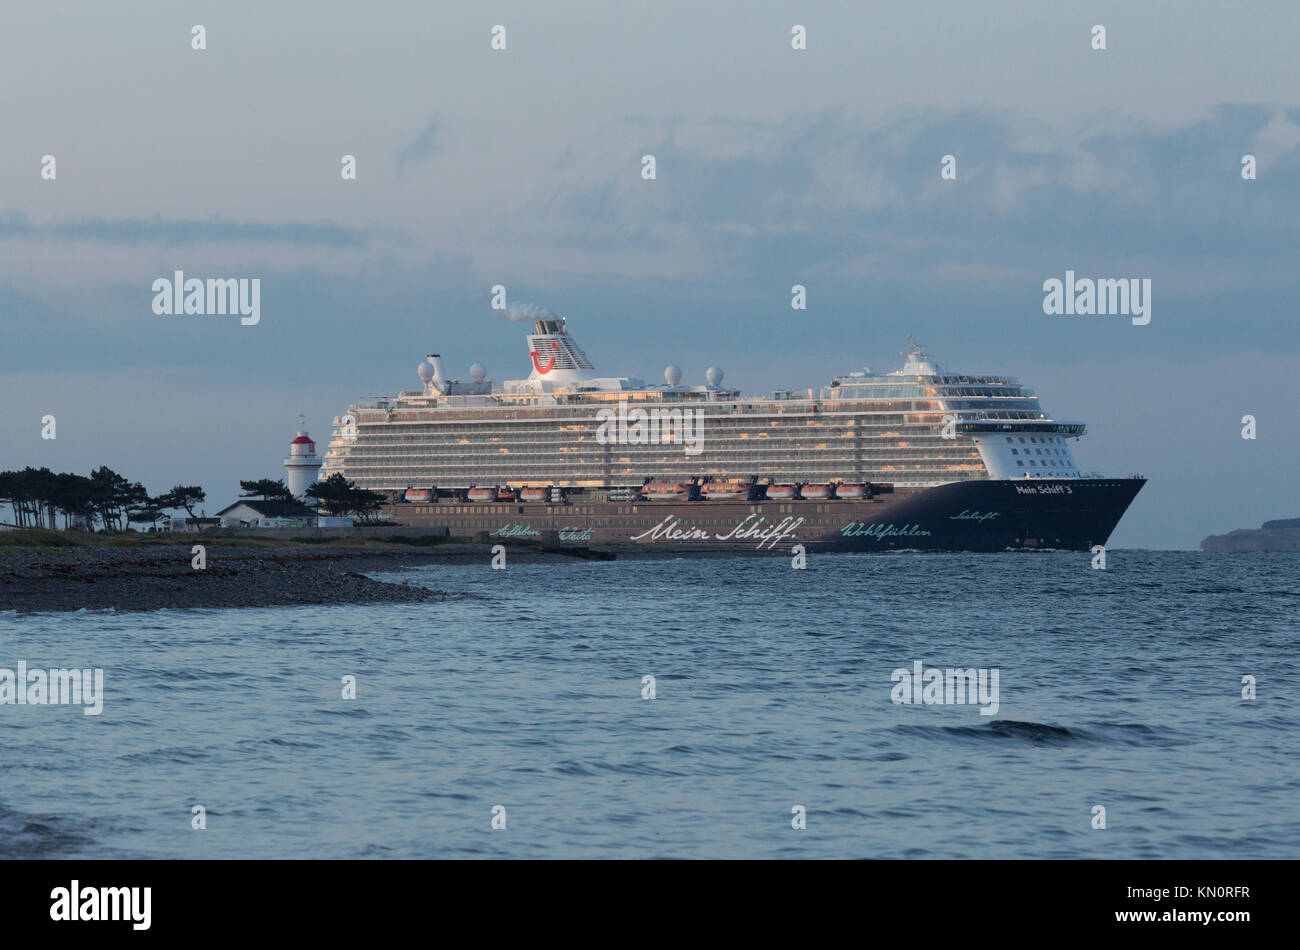 The cruise ship Mein Schiff 3 pass Sletterhage on its way to Aarhus Stock Photo